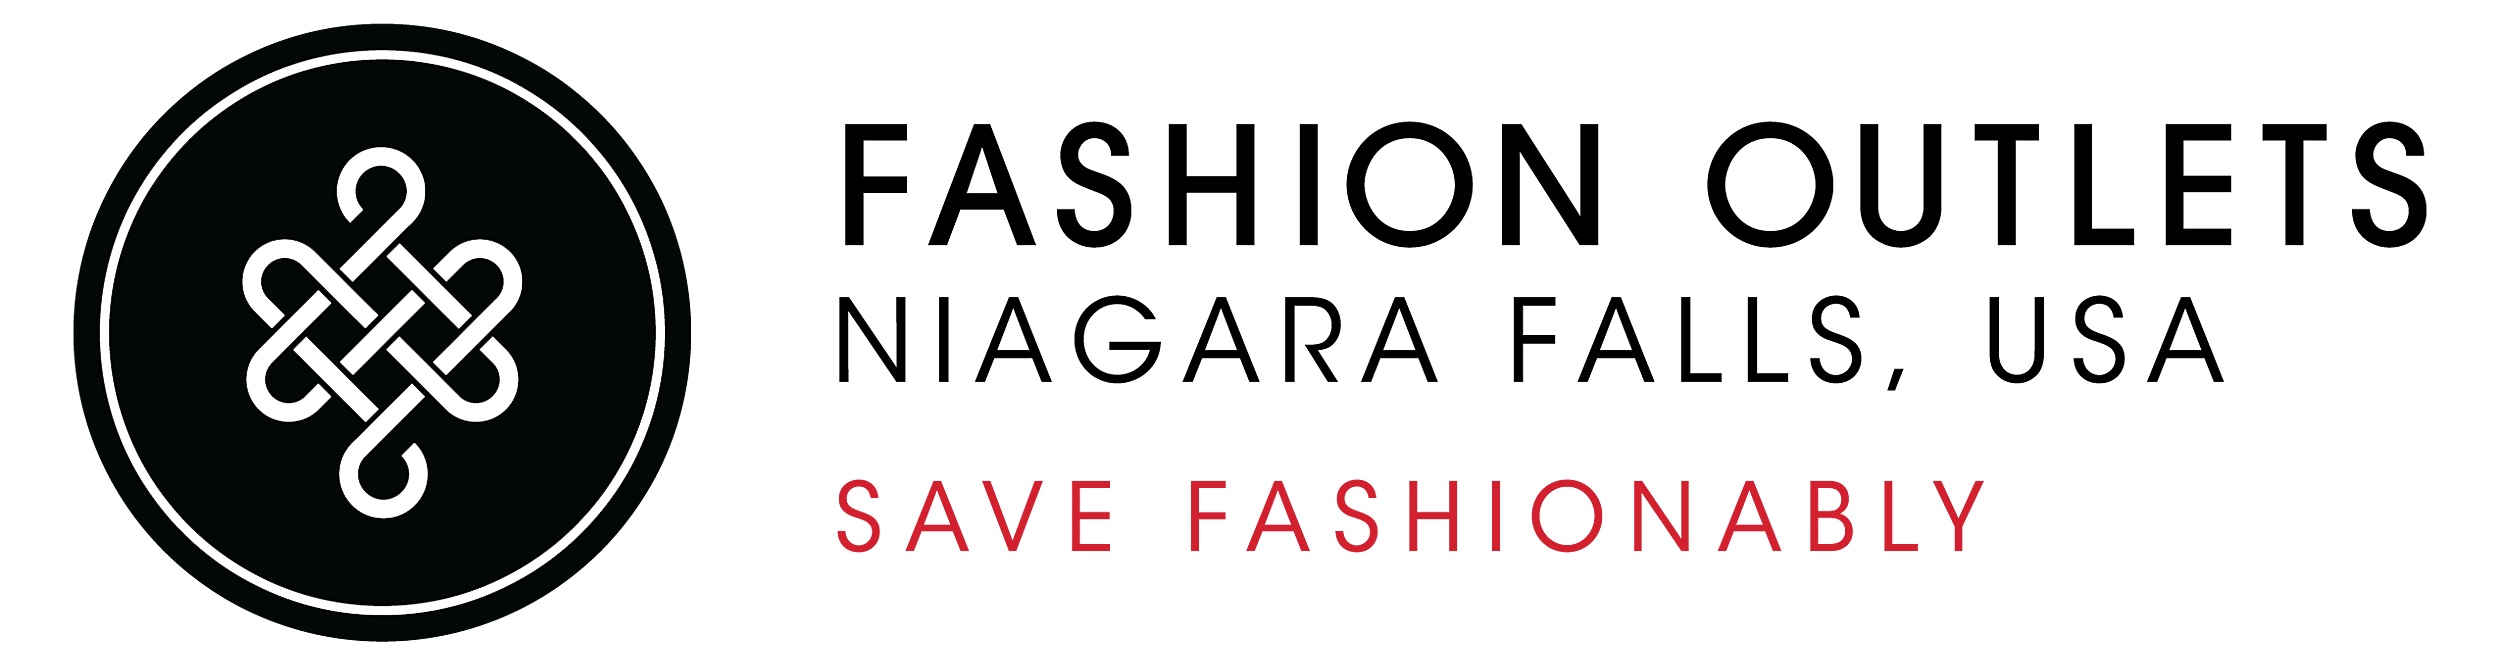 Fashion Outlets Niagara Falls, USA Save Fashionably